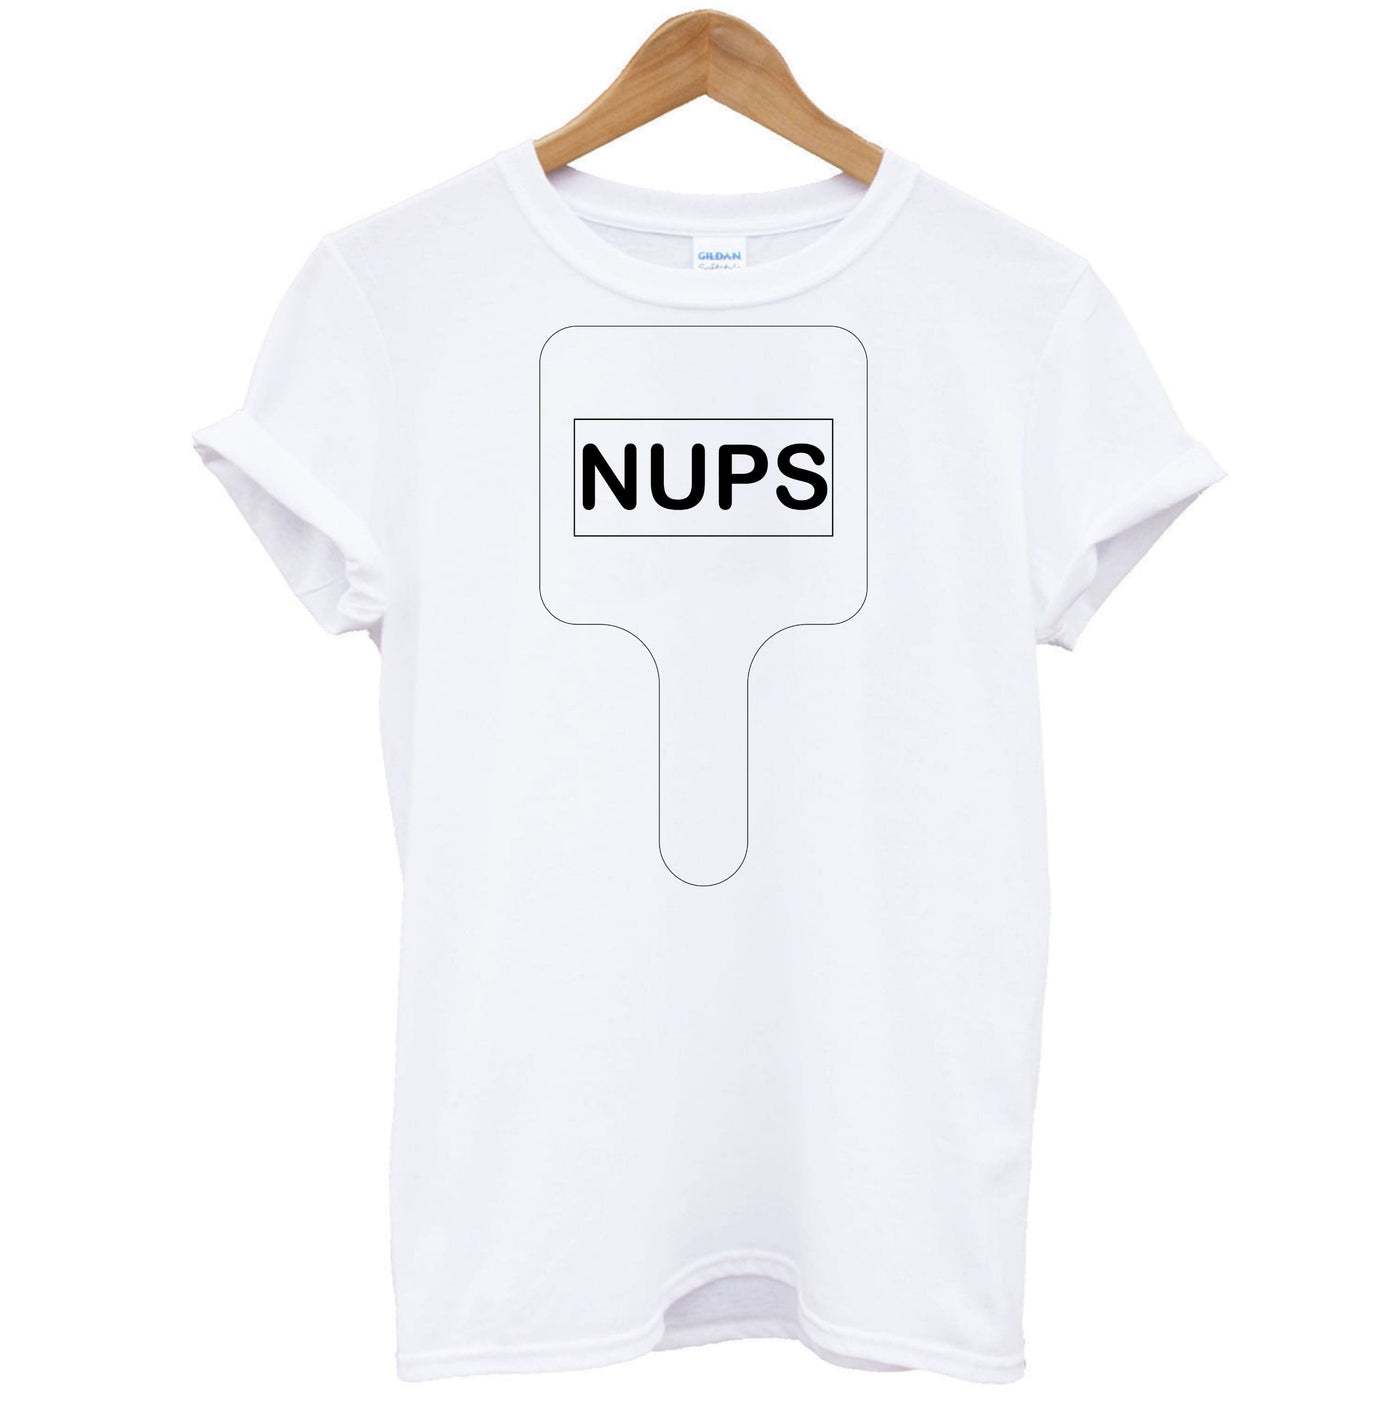 Nups - Brooklyn Nine-Nine T-Shirt